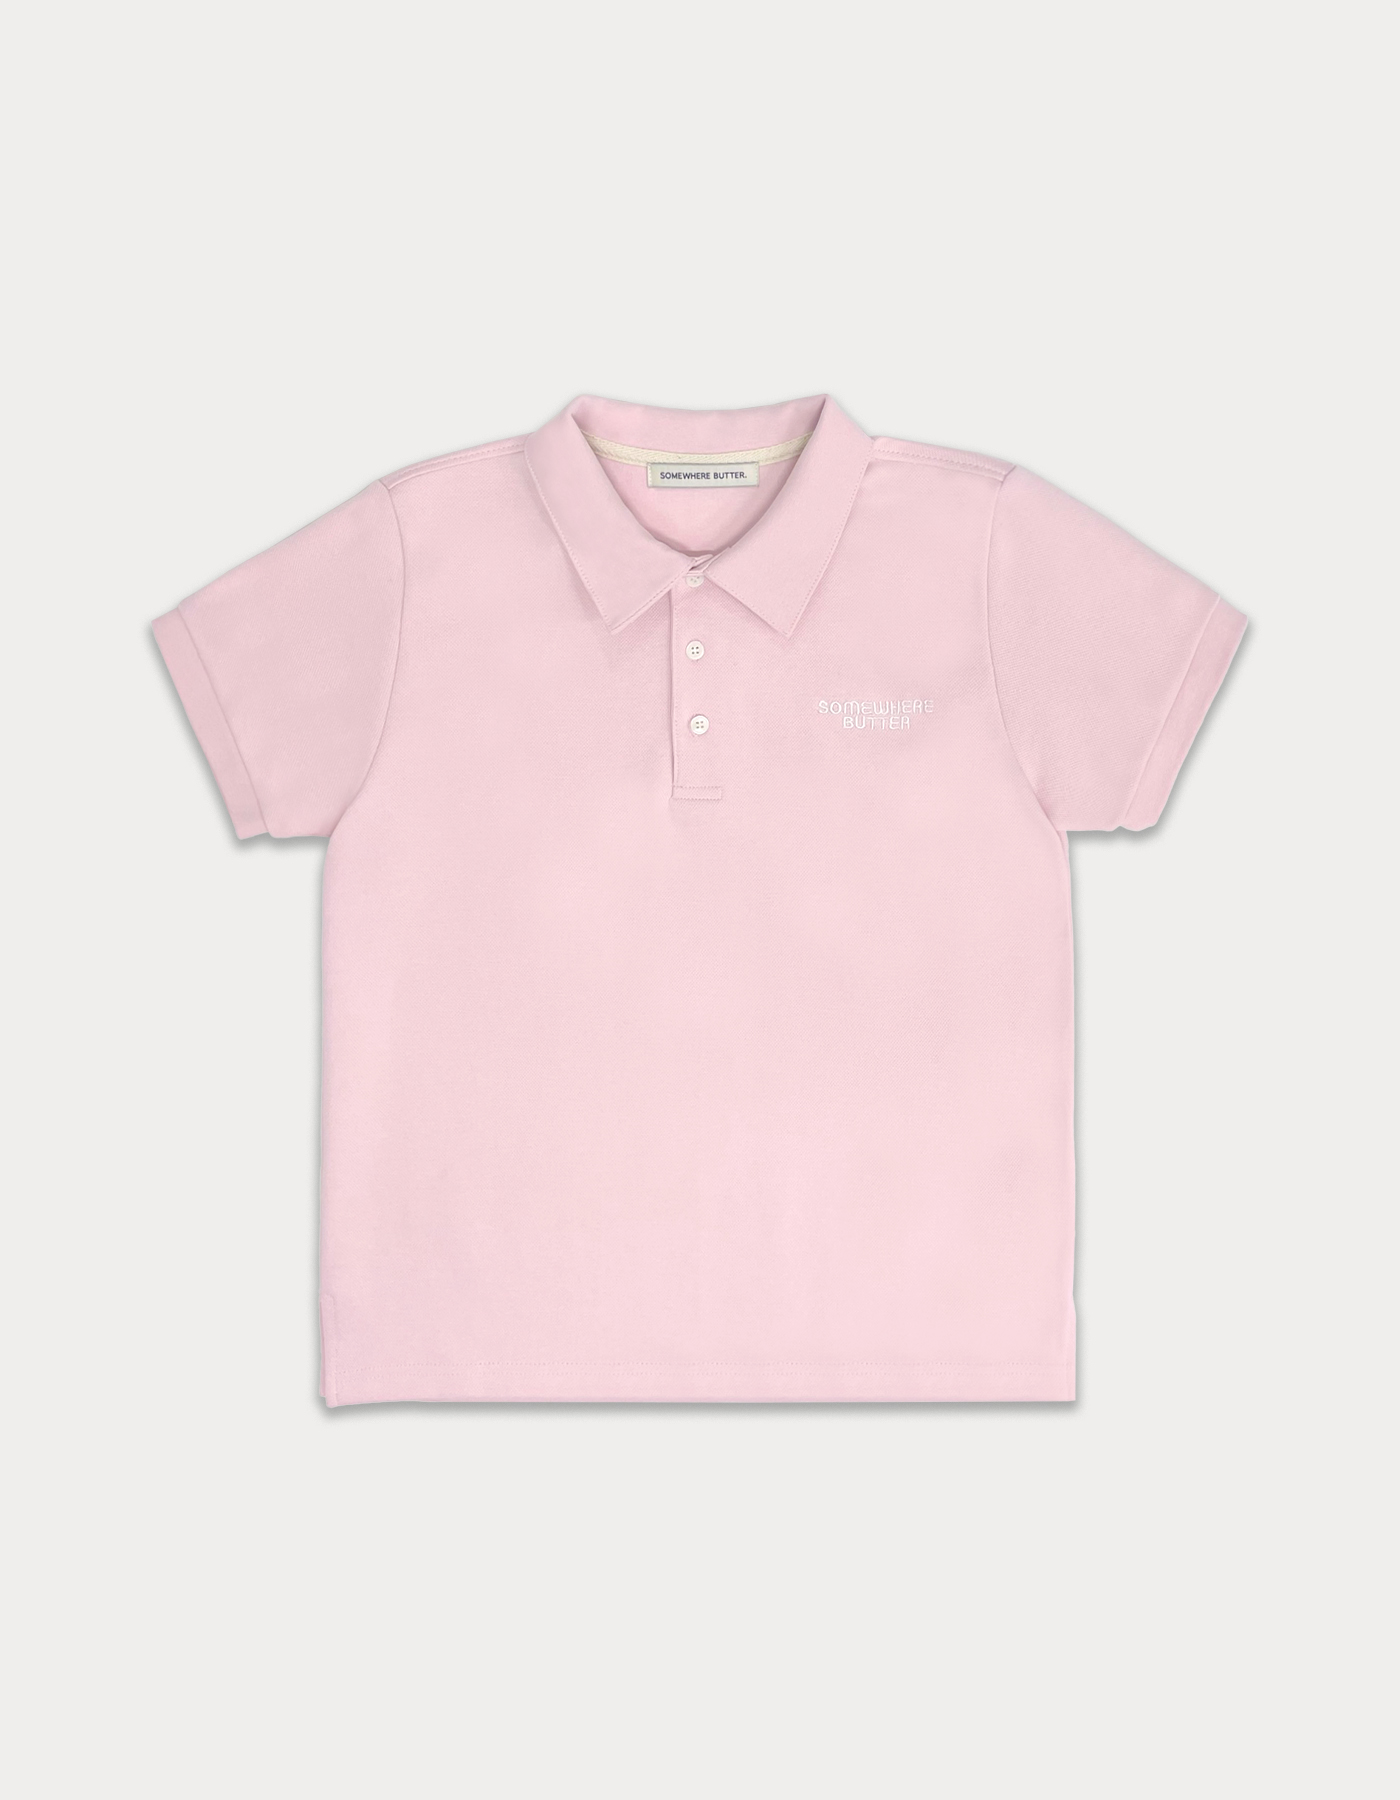 Classy logo pique top - pink